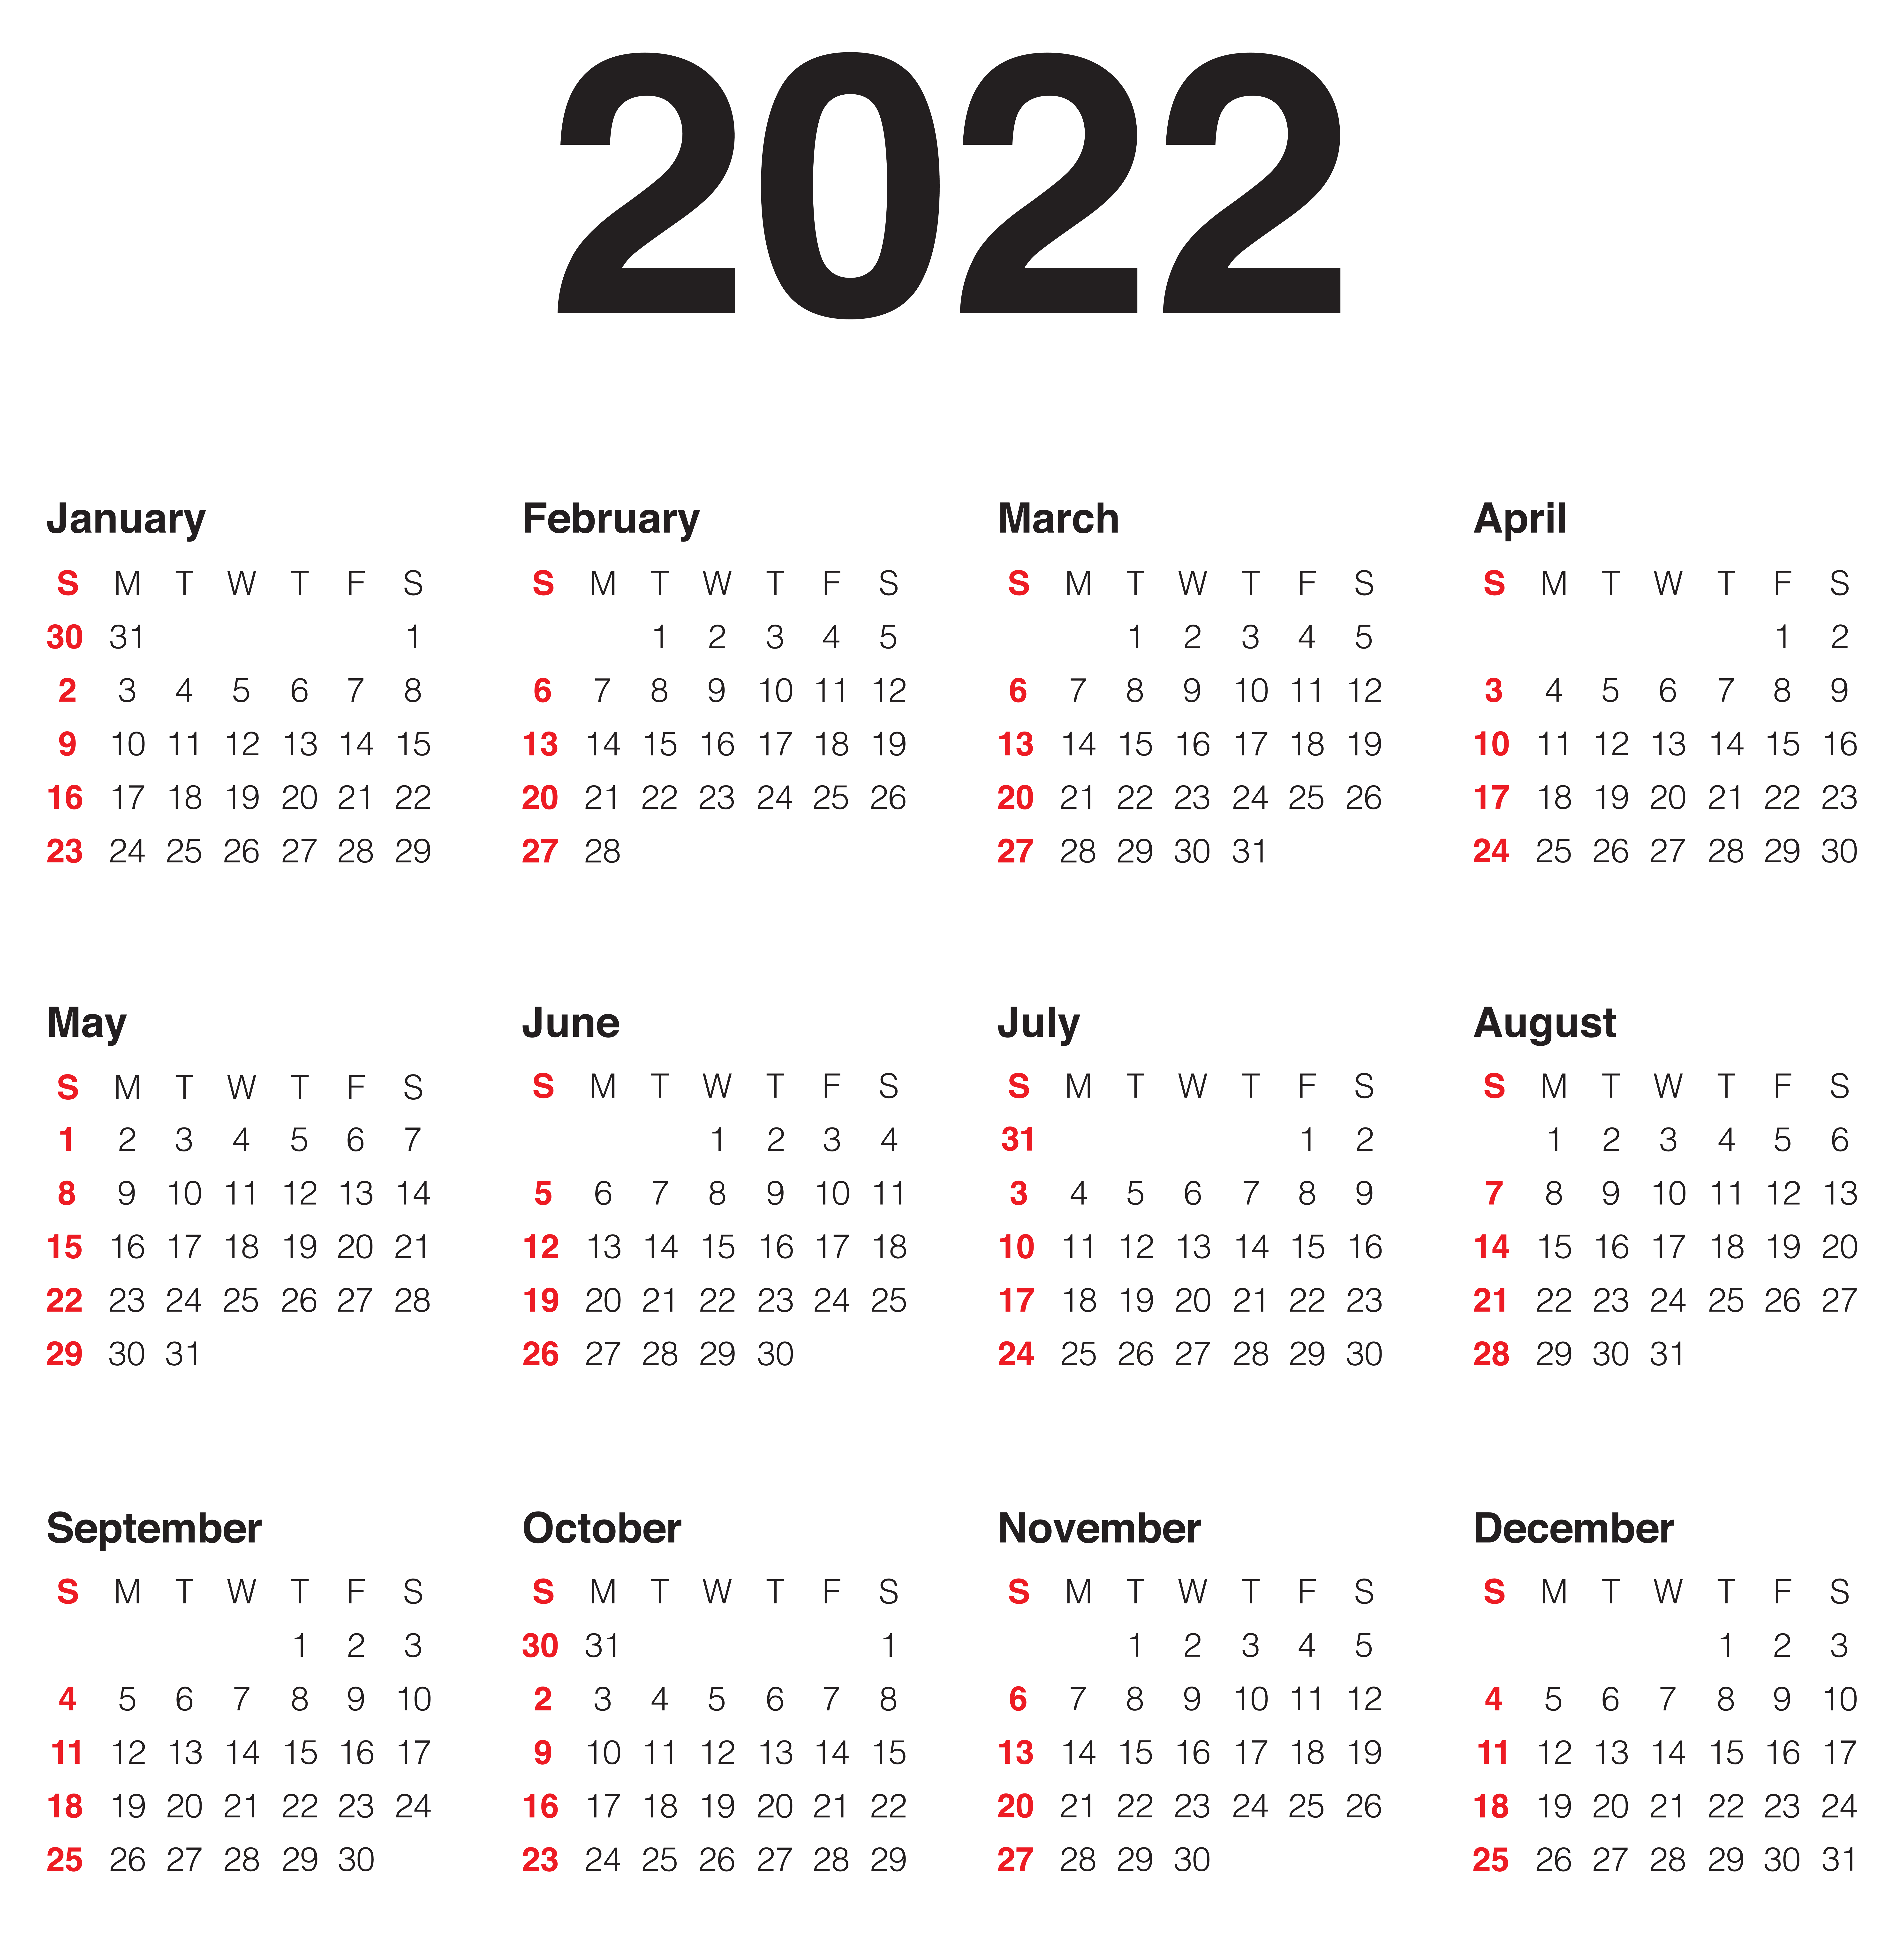 january 2022 calendar clip art